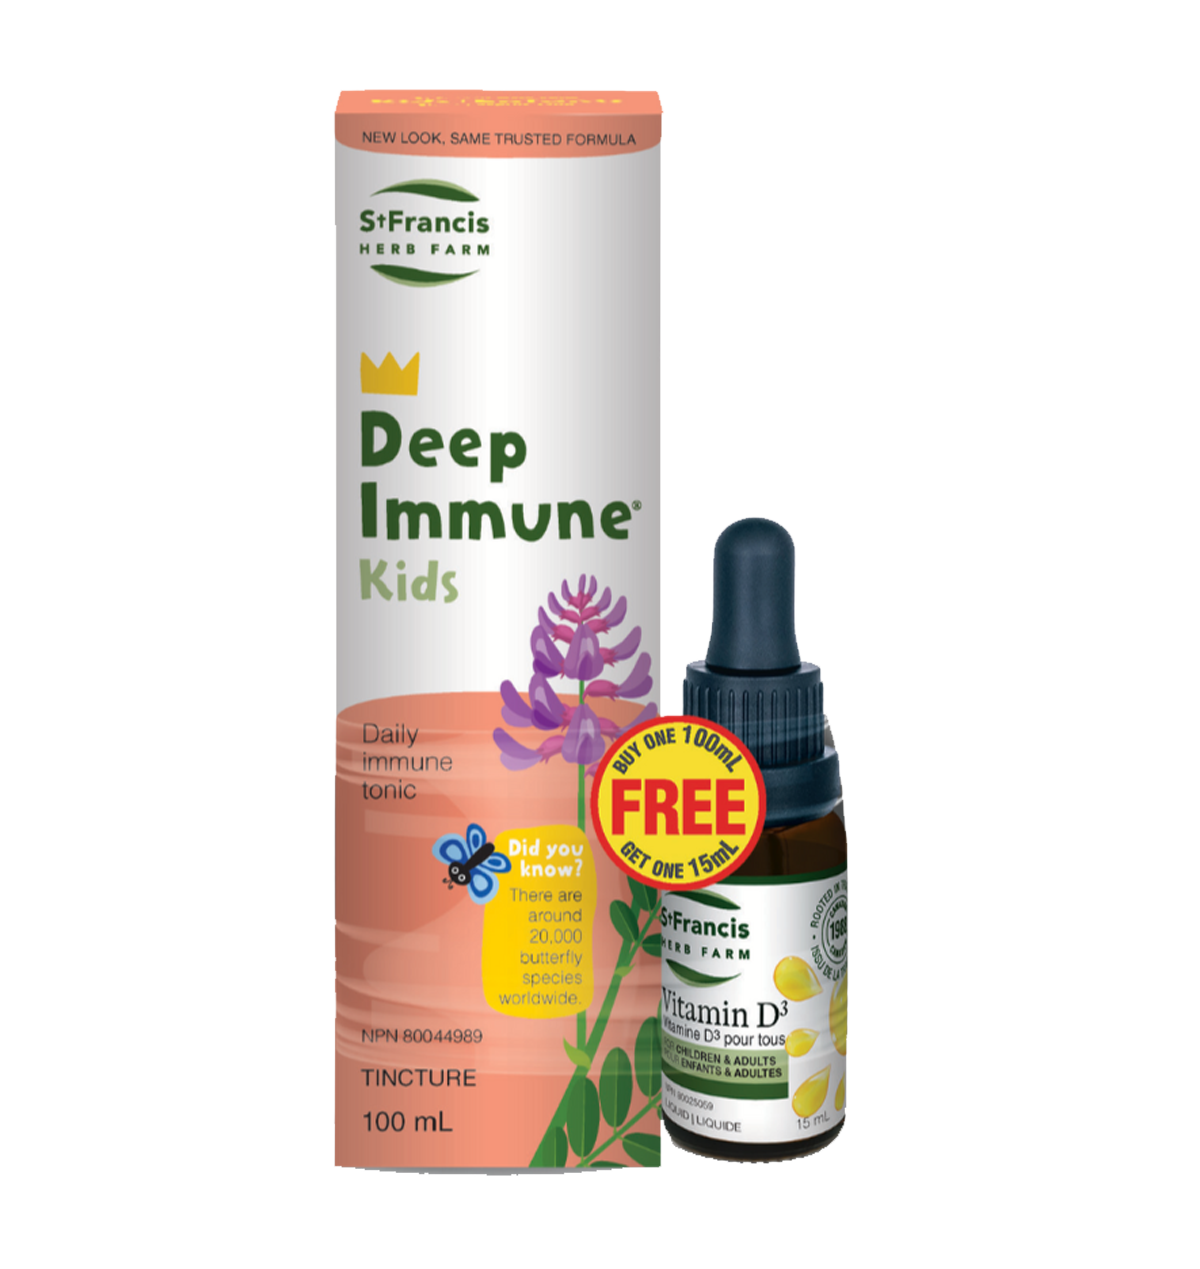 St. Francis Deep Immune Kids 100mL + FREE Vitamin D3 15mL